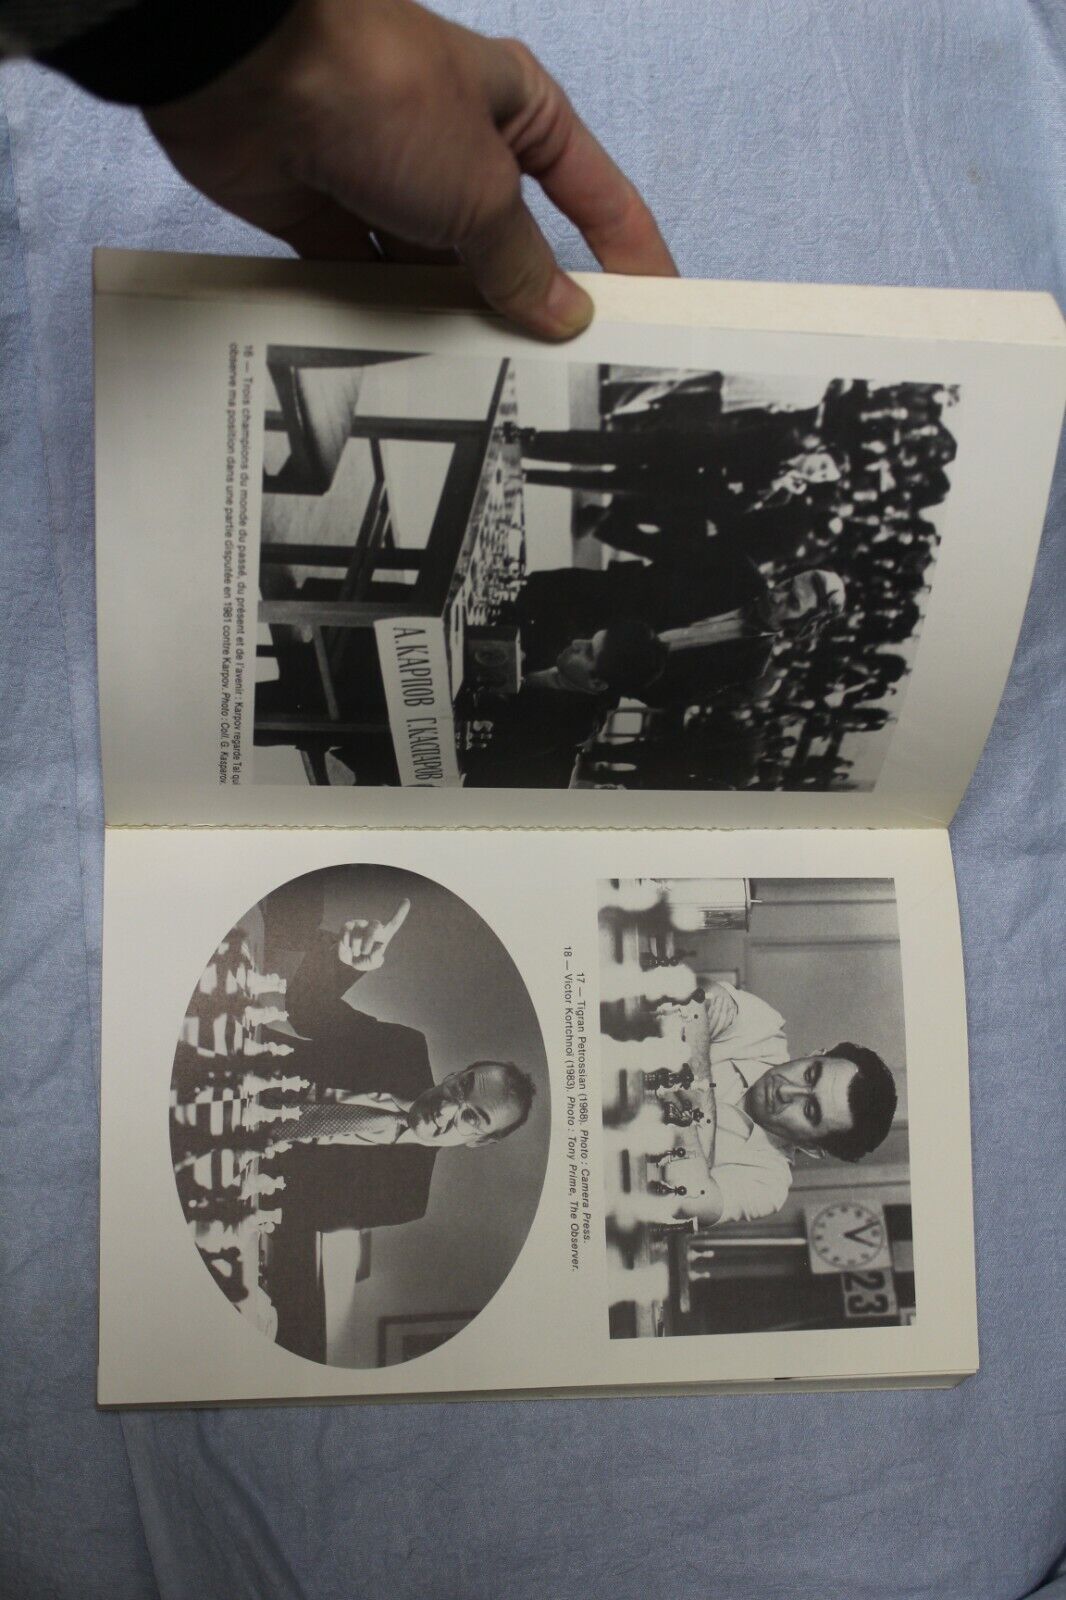 11071.Chess Book: Garry Kasparov, Et le Fou devint Roi w photos, 1987